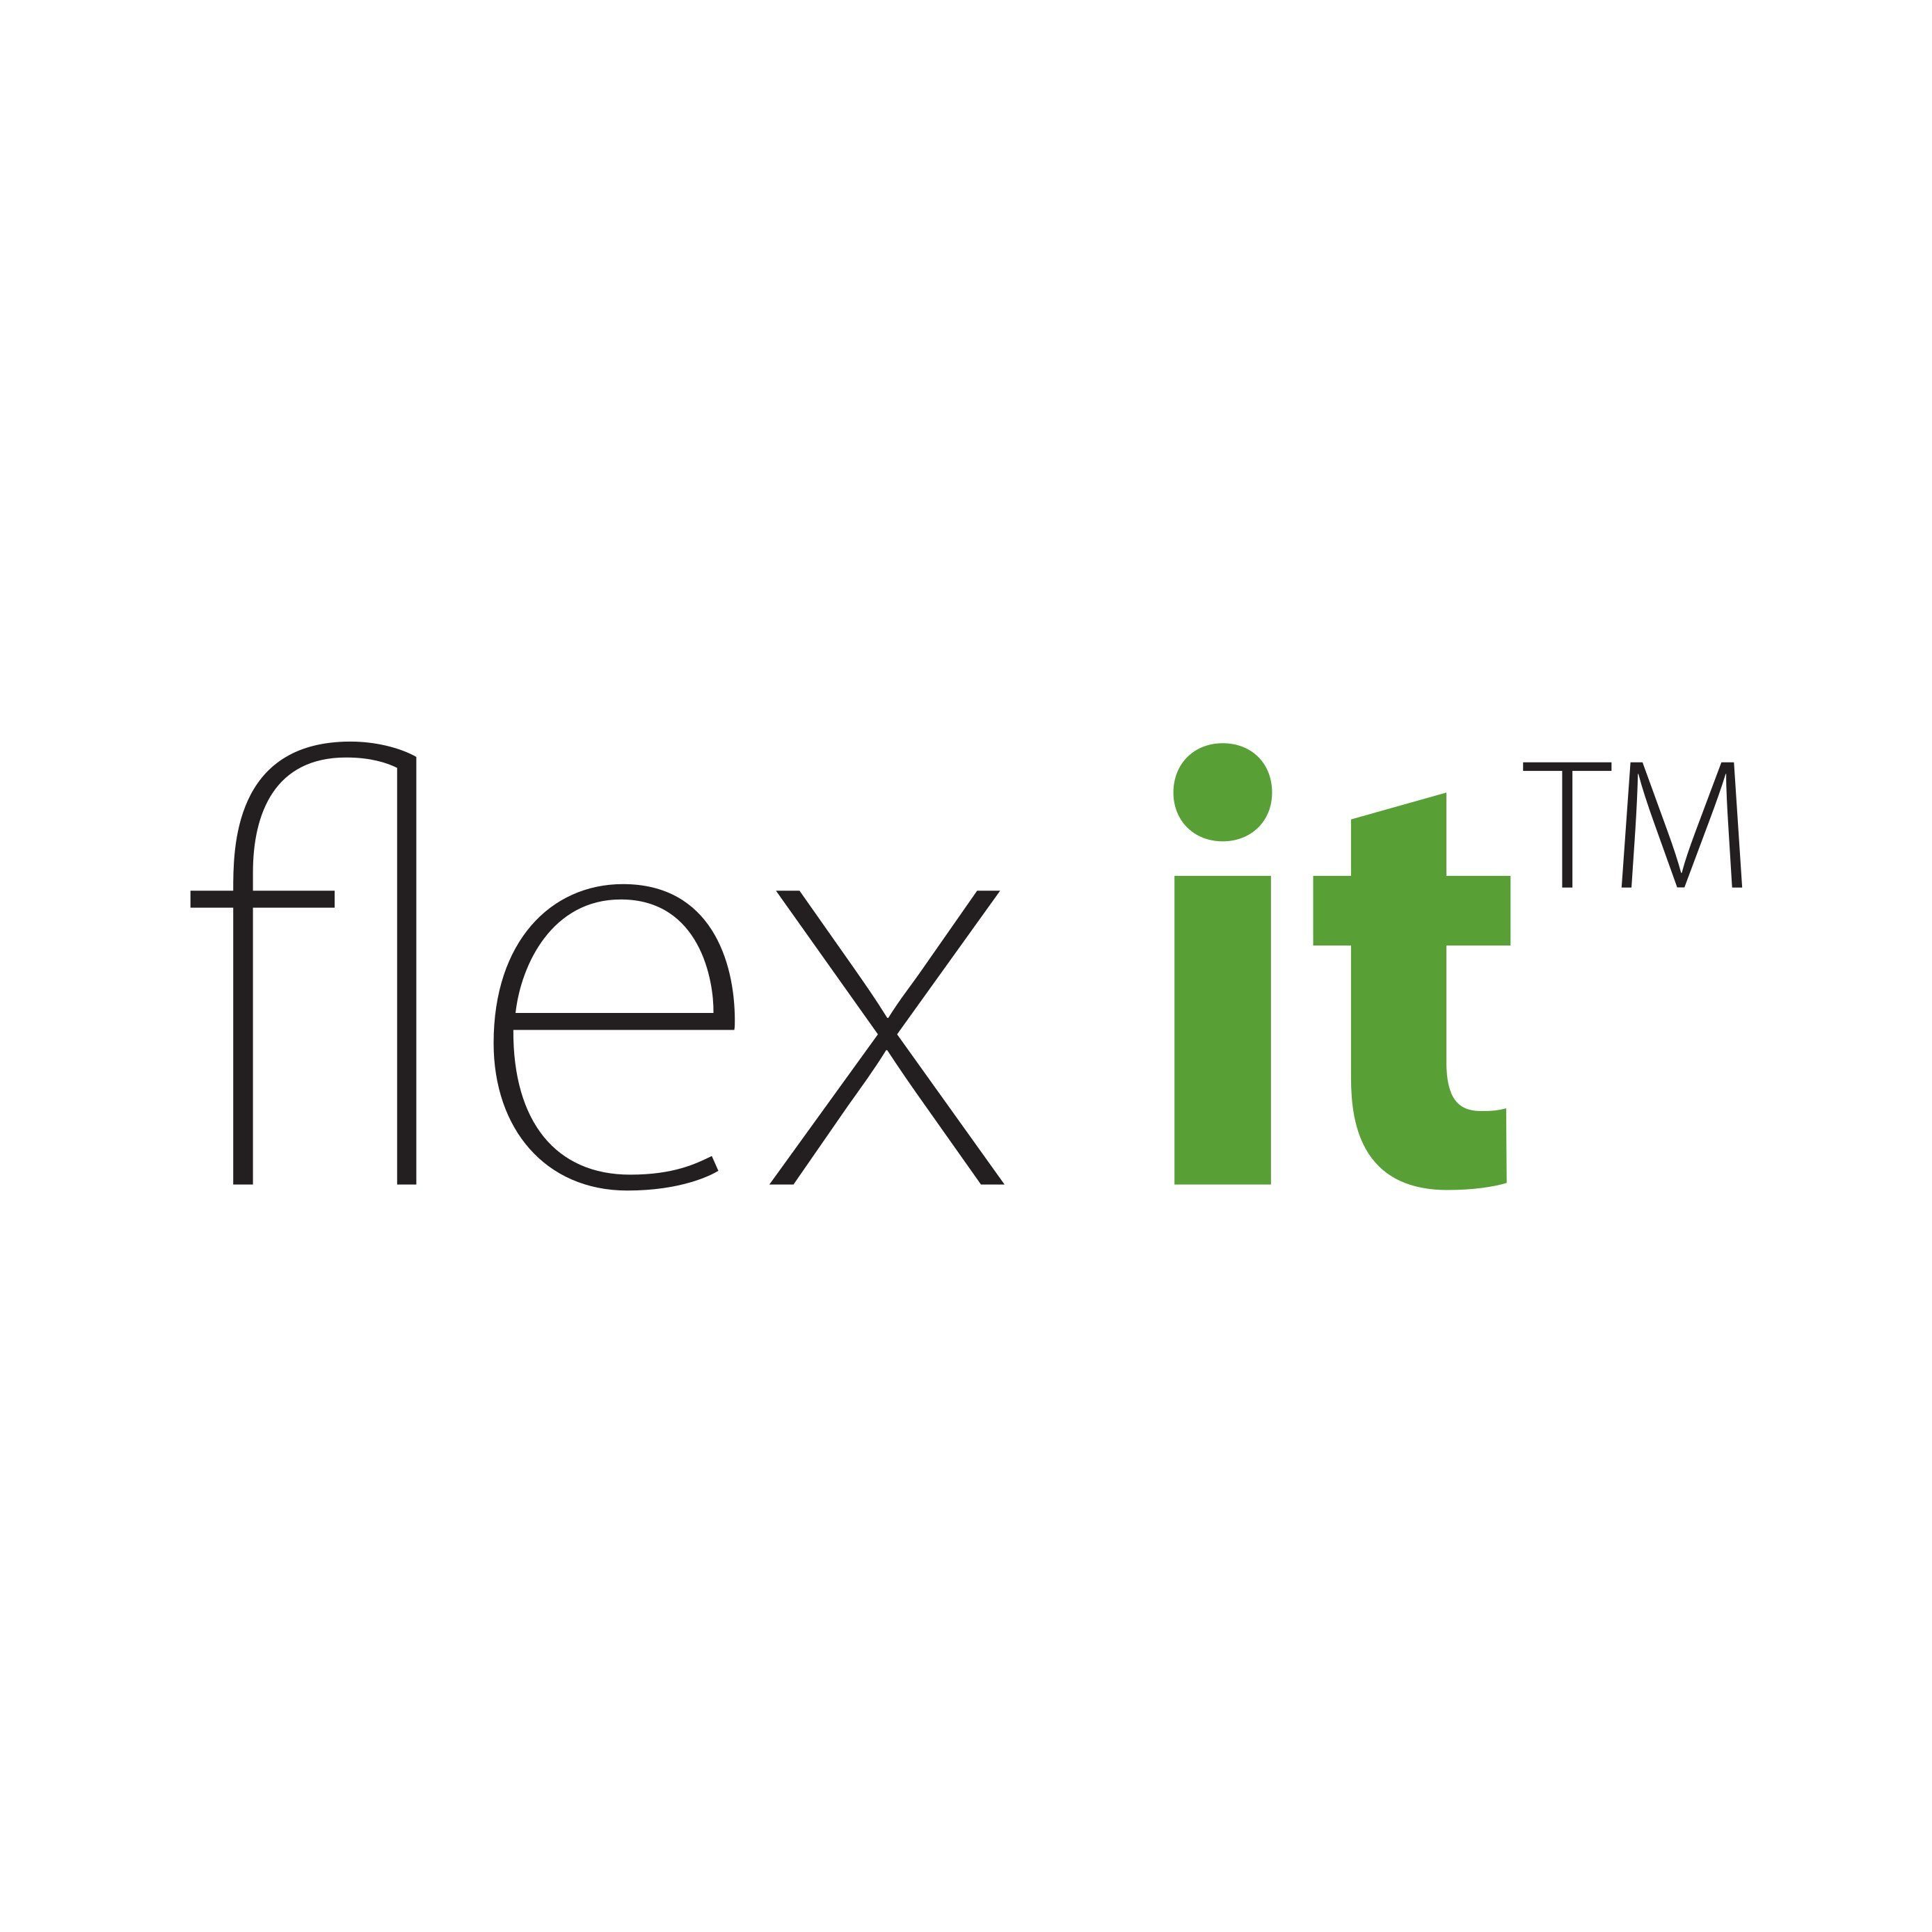 flex it